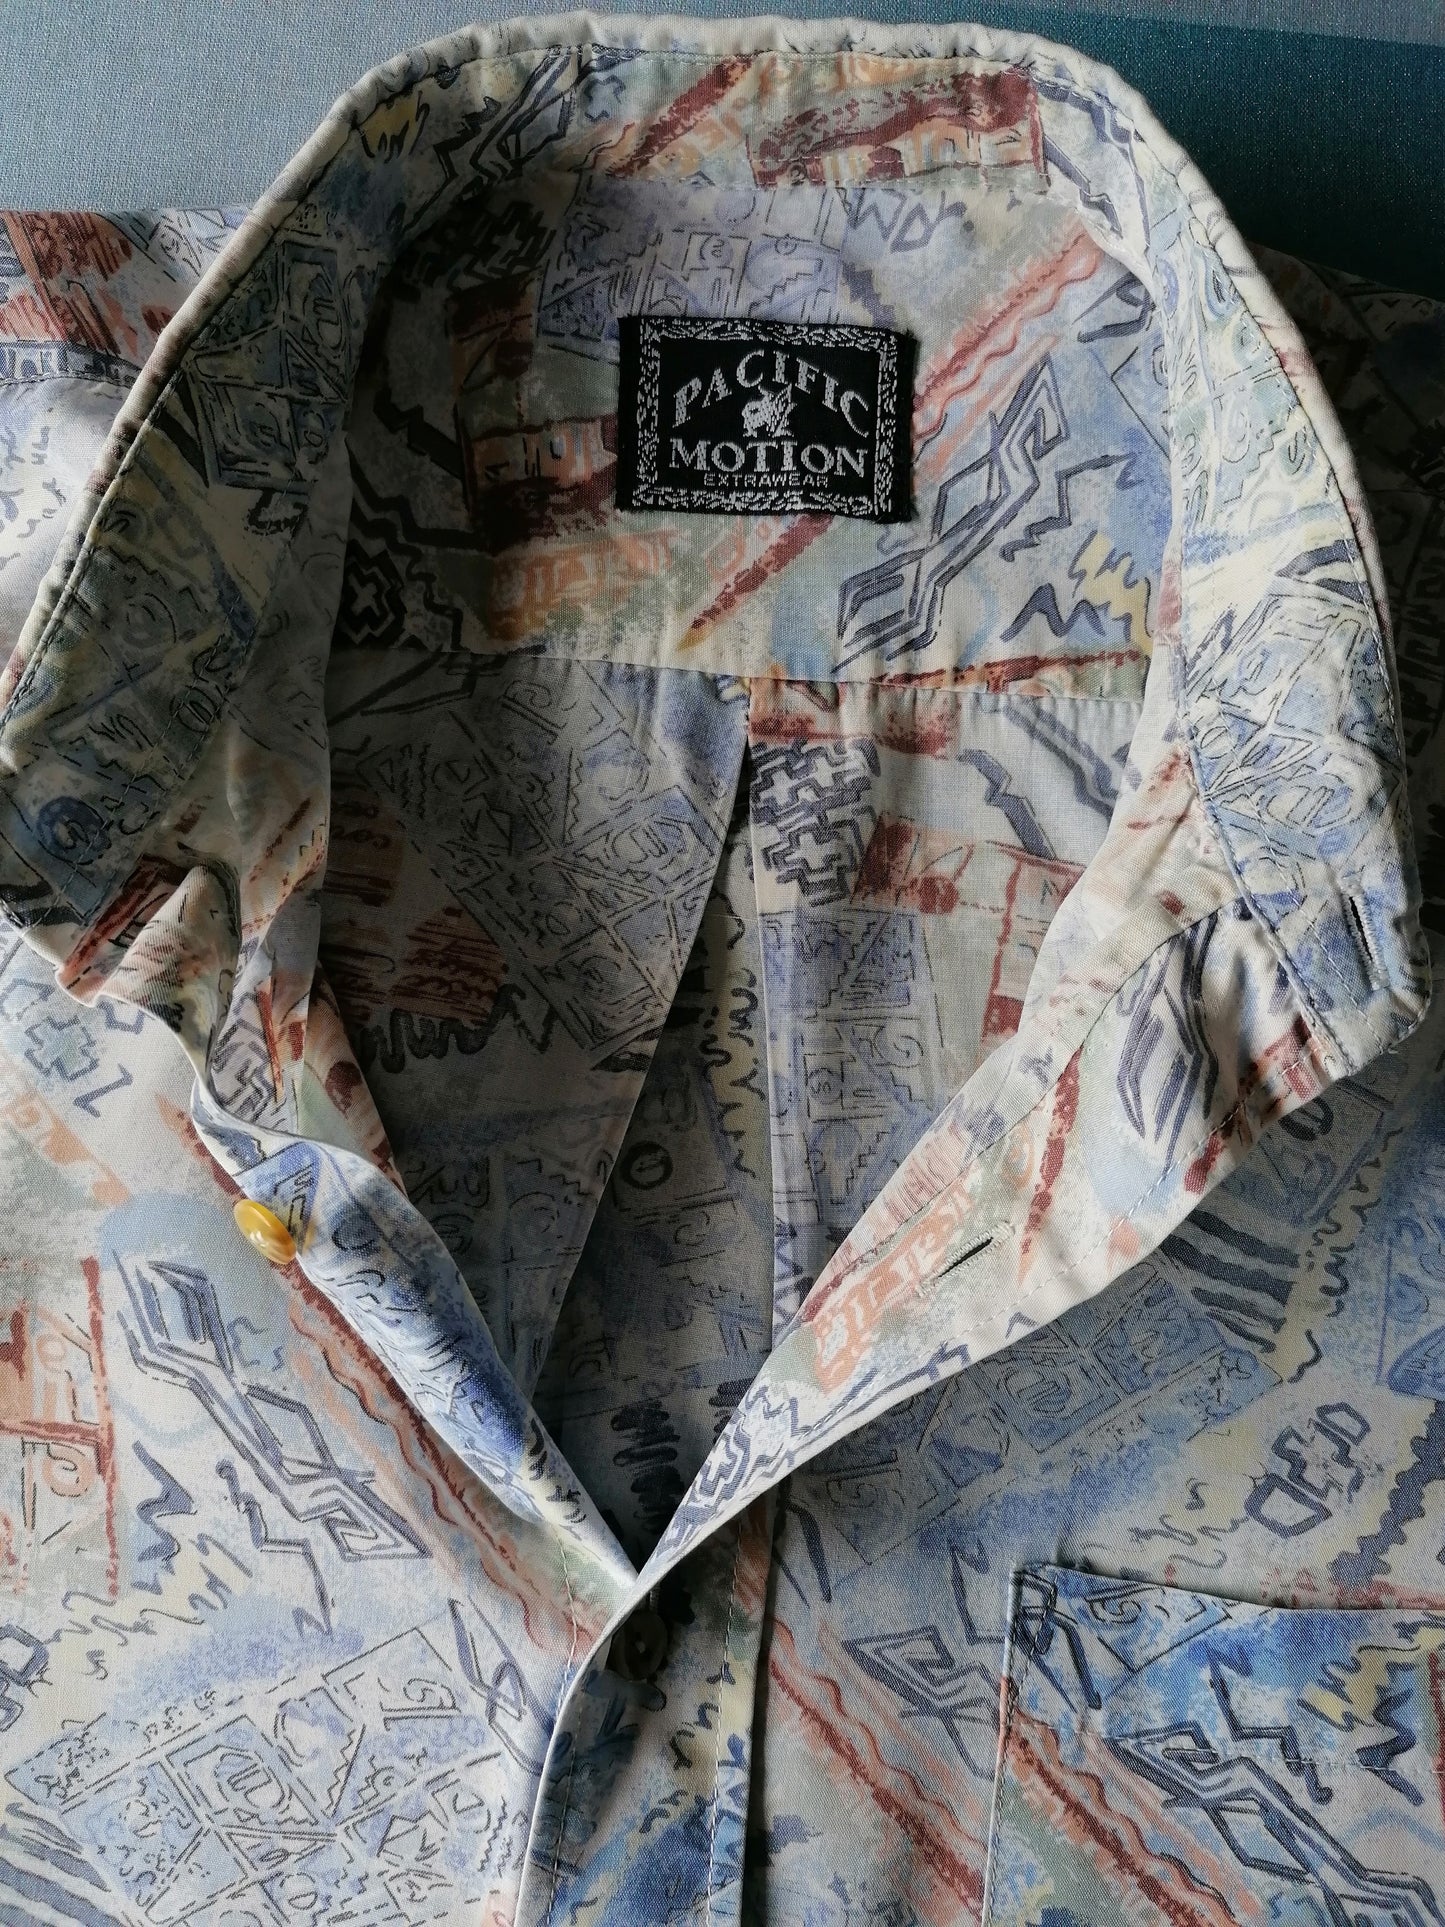 Camisa de manga corta vintage. Impresión azul marrón amarillo 90. Tamaño XL